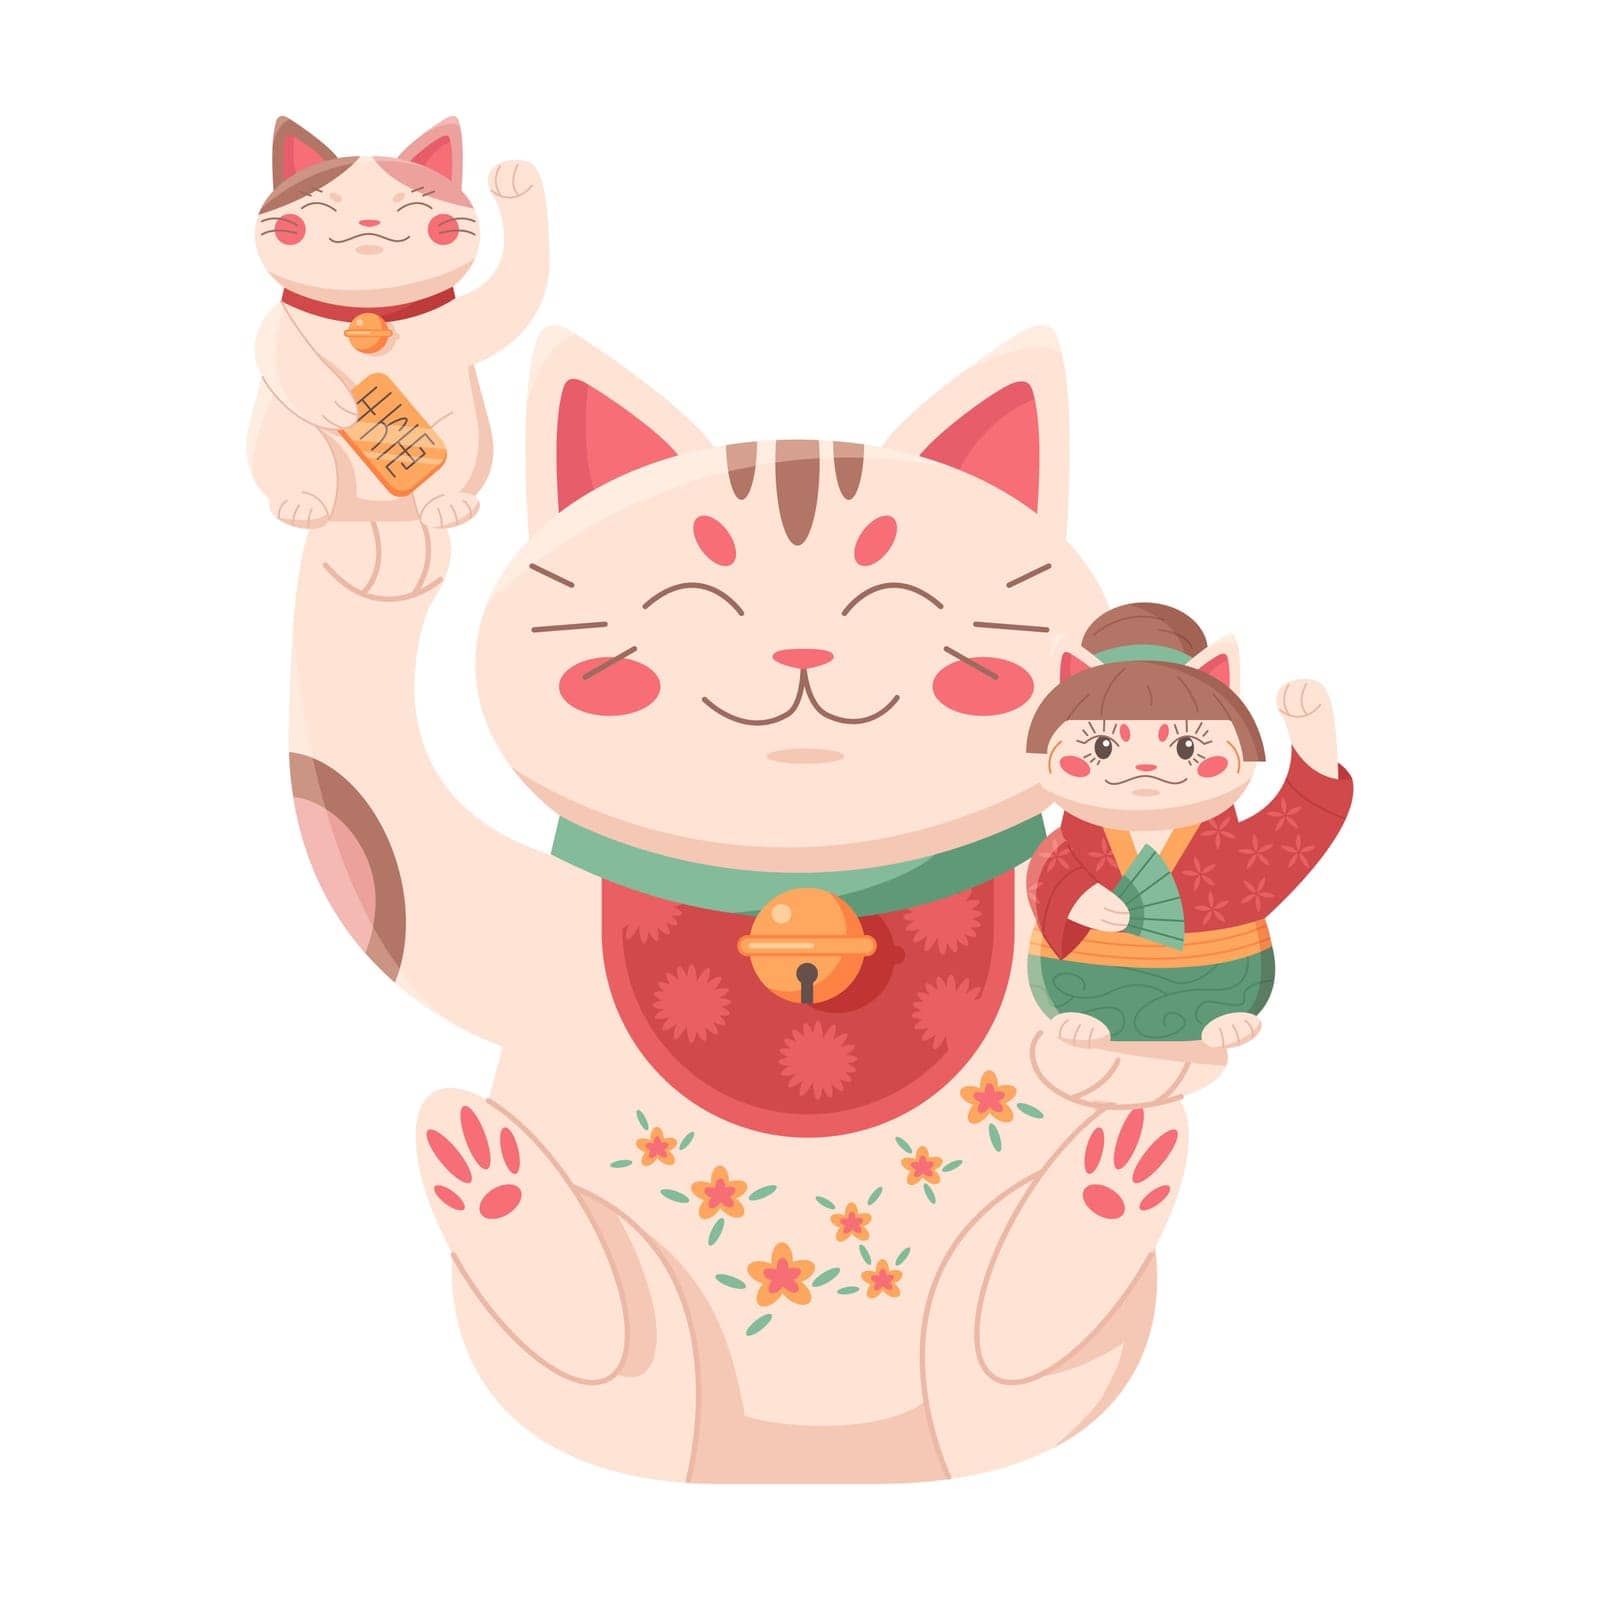 Maneki neko fortune cat by Popov